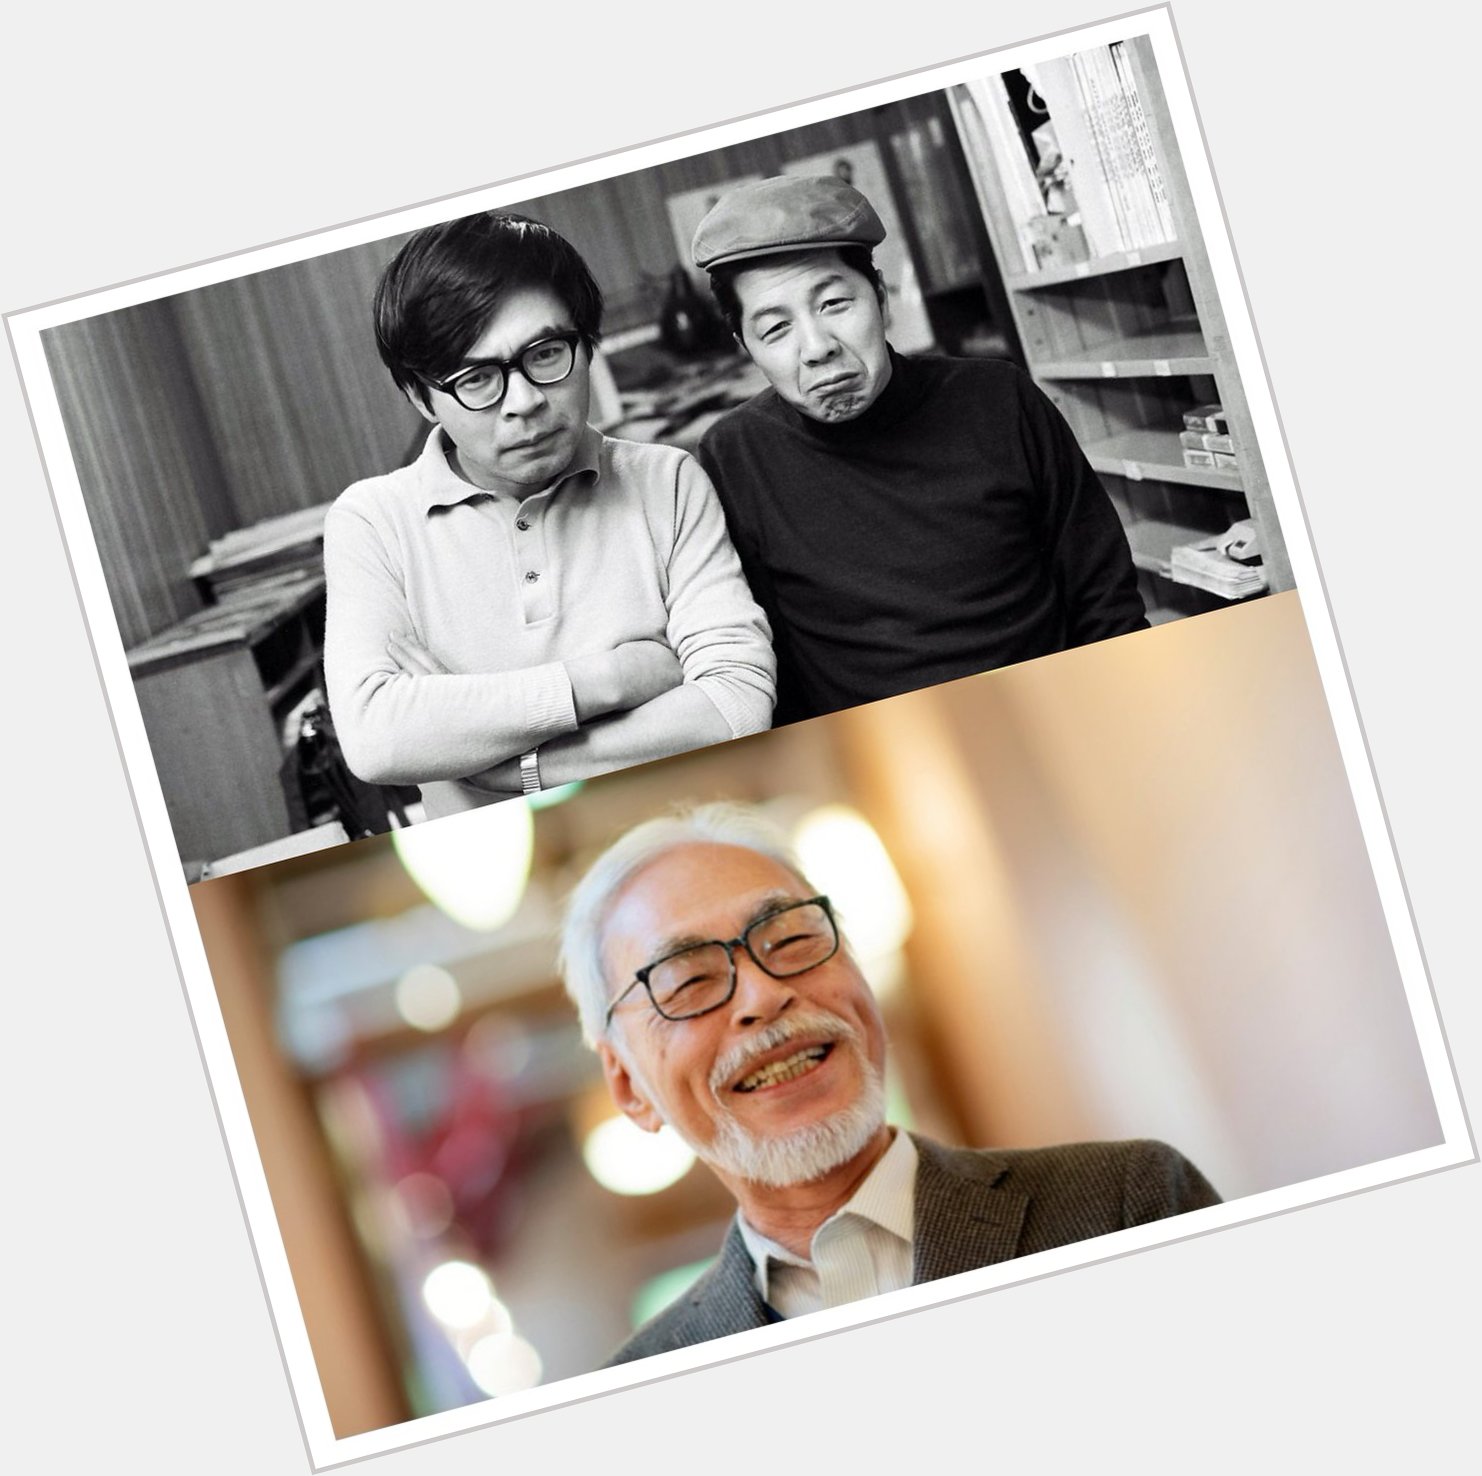 Happy Birthday Hayao Miyazaki!
I wish you good health for many years to come. 